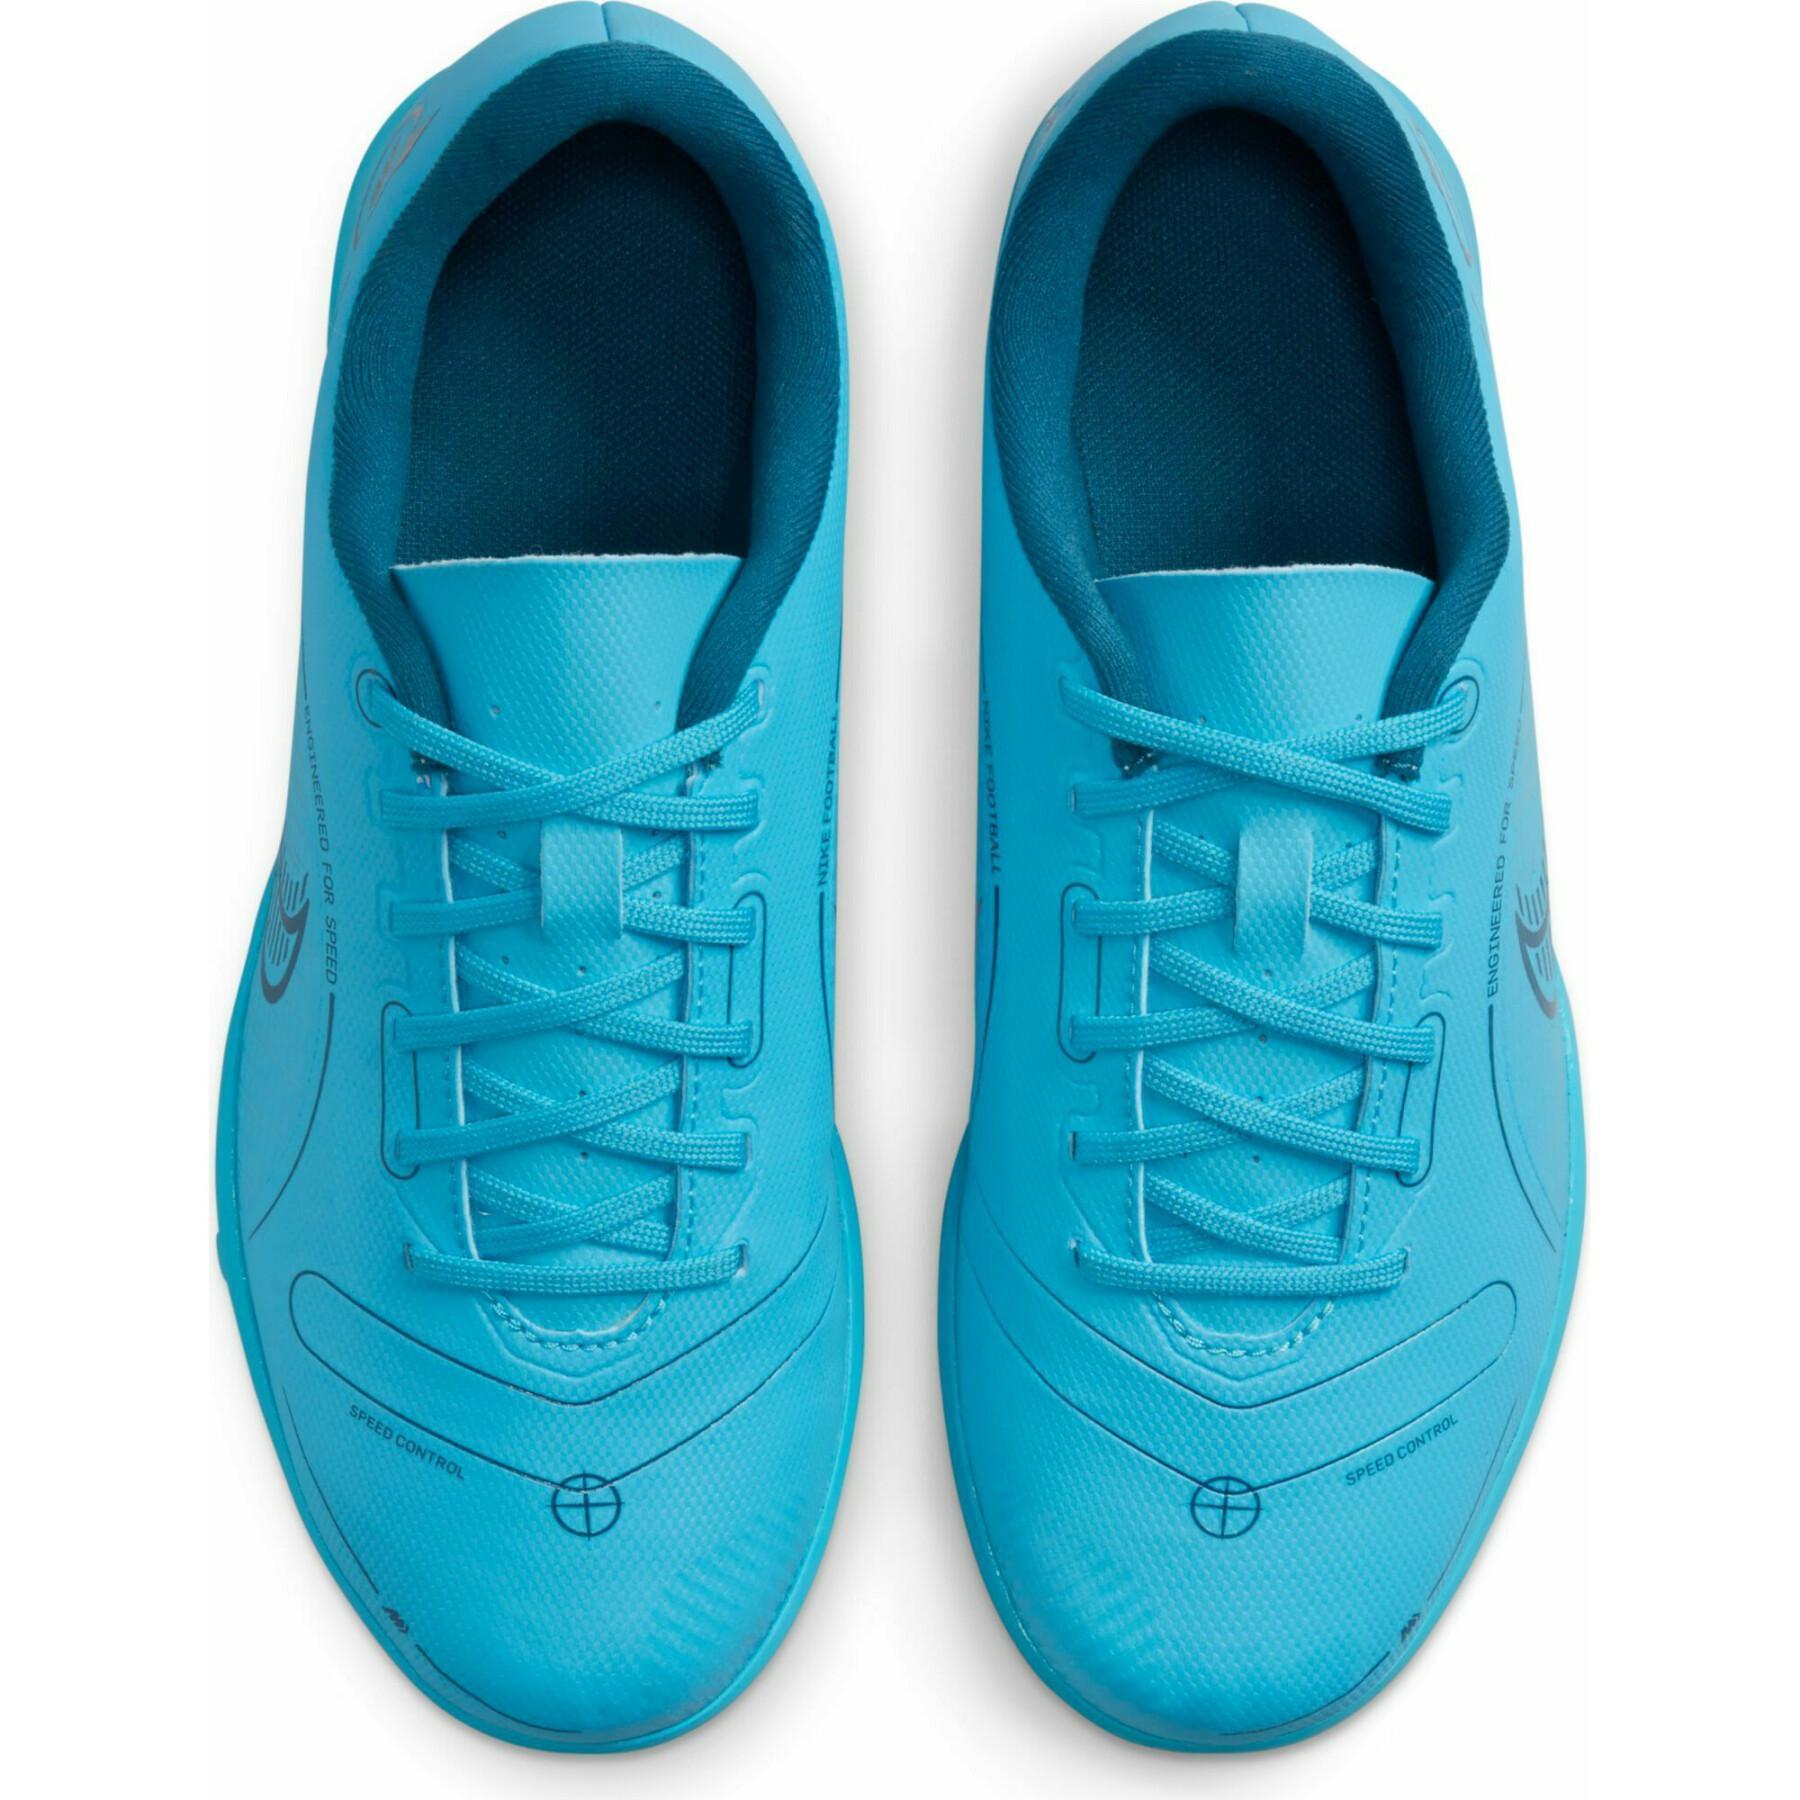 Chaussures de football enfant Nike Jr Vapor 14 club TF -Blueprint Pack